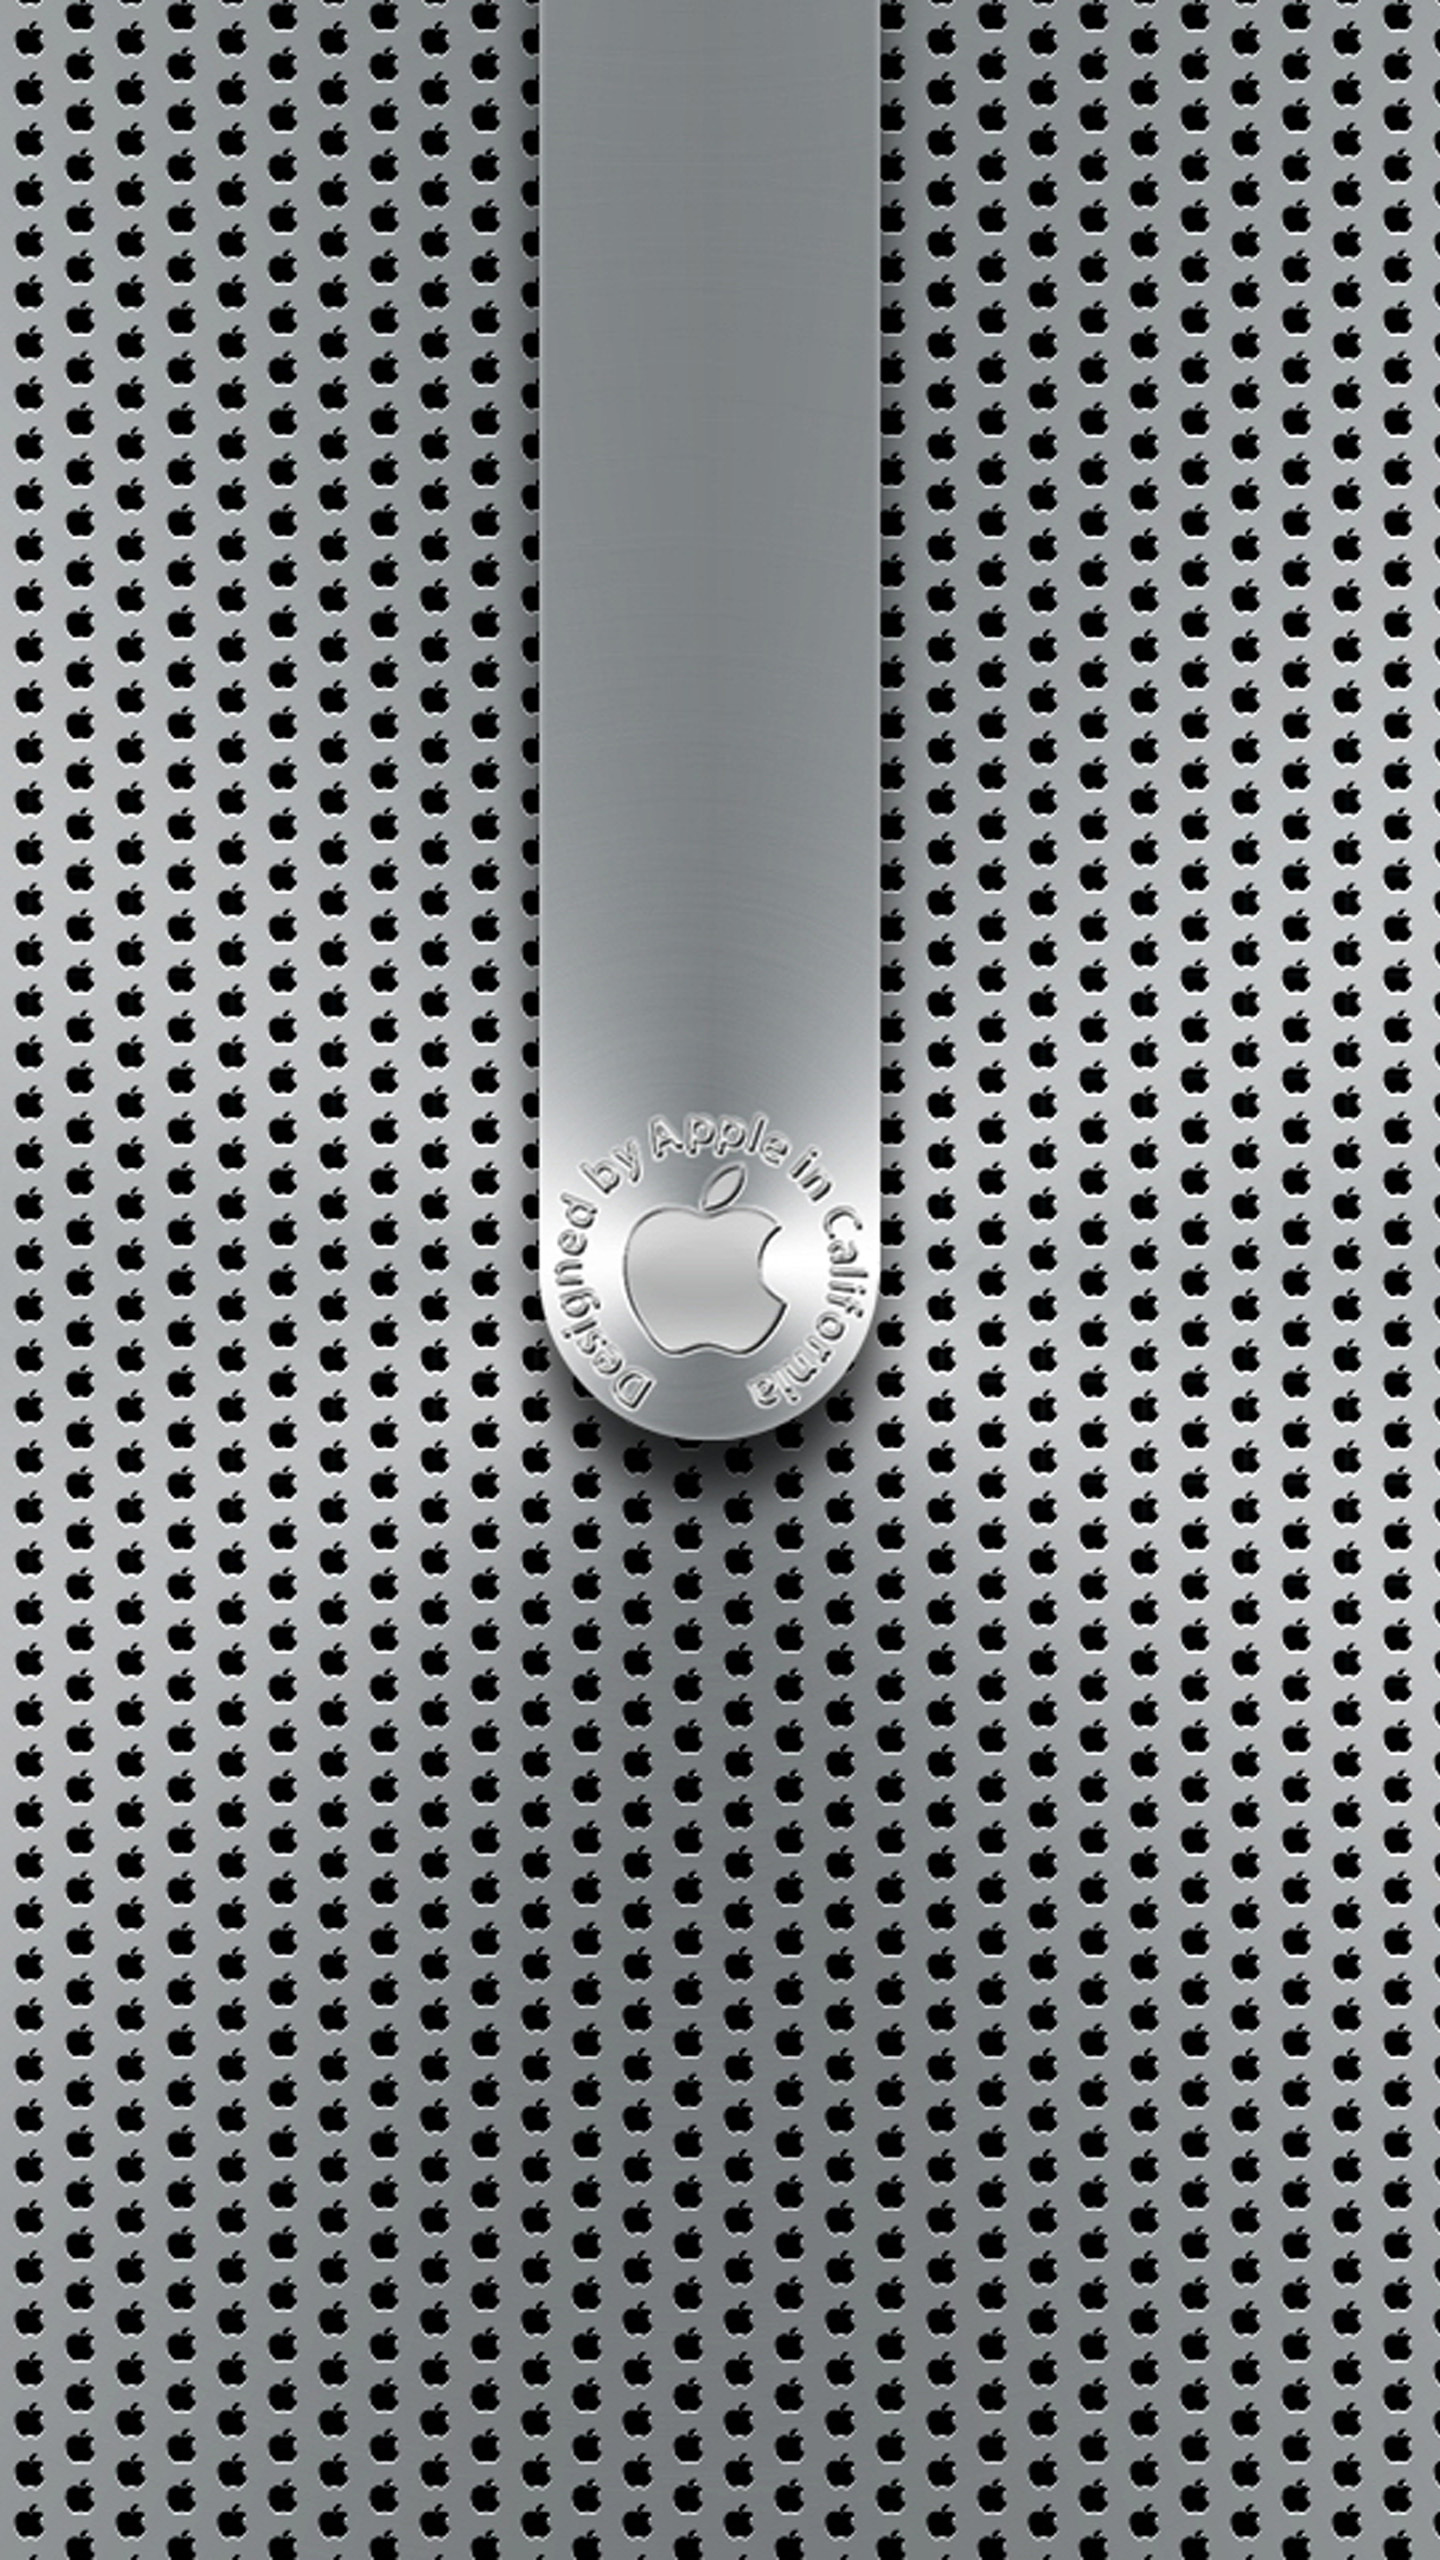 wallpaper für handy android,gittergewebe,metall,muster,design,kohlenstoff